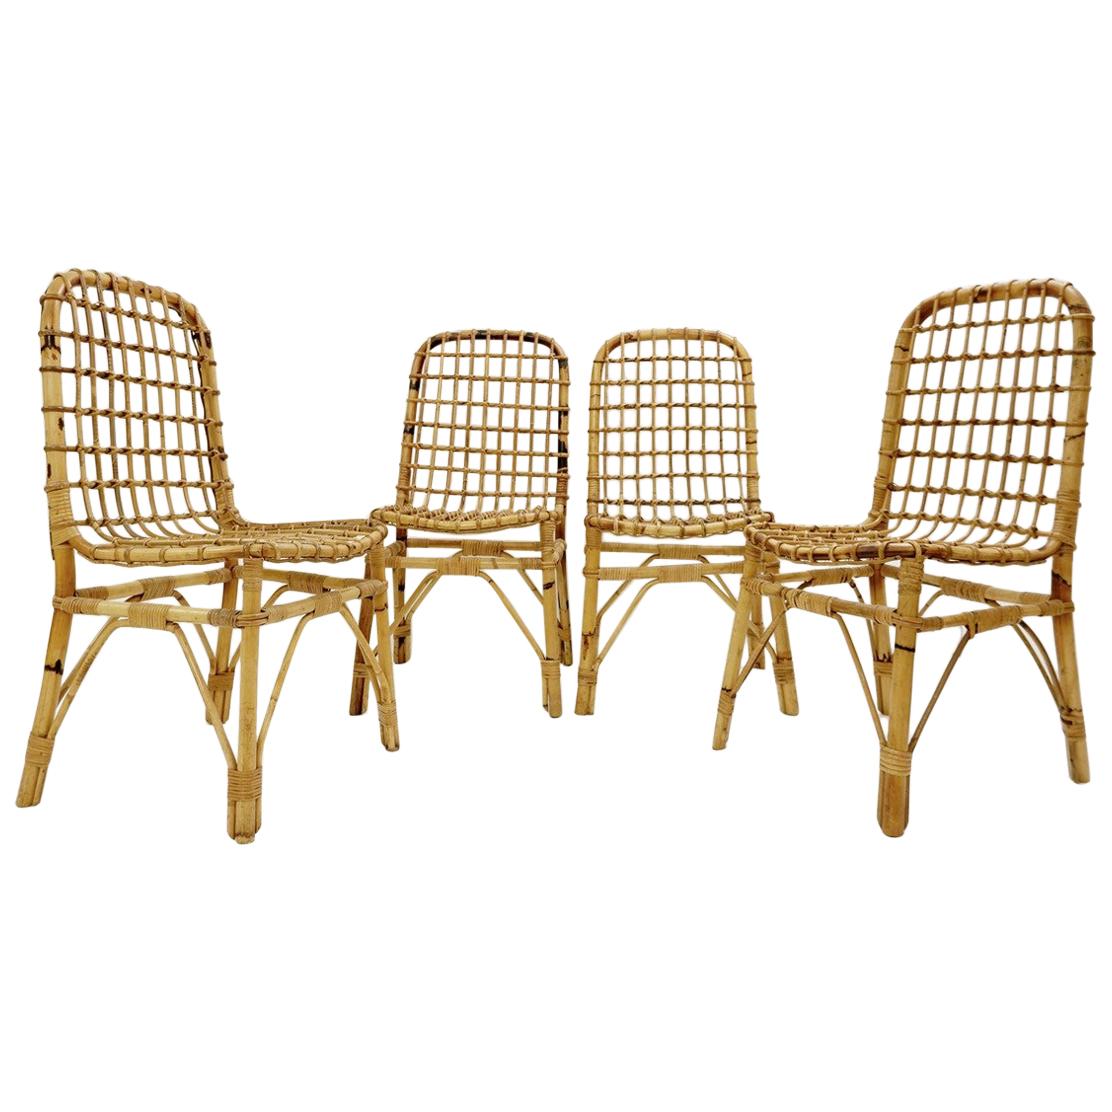 Set of 4 Mid-Century Modern Rattan Chairs, 1960s